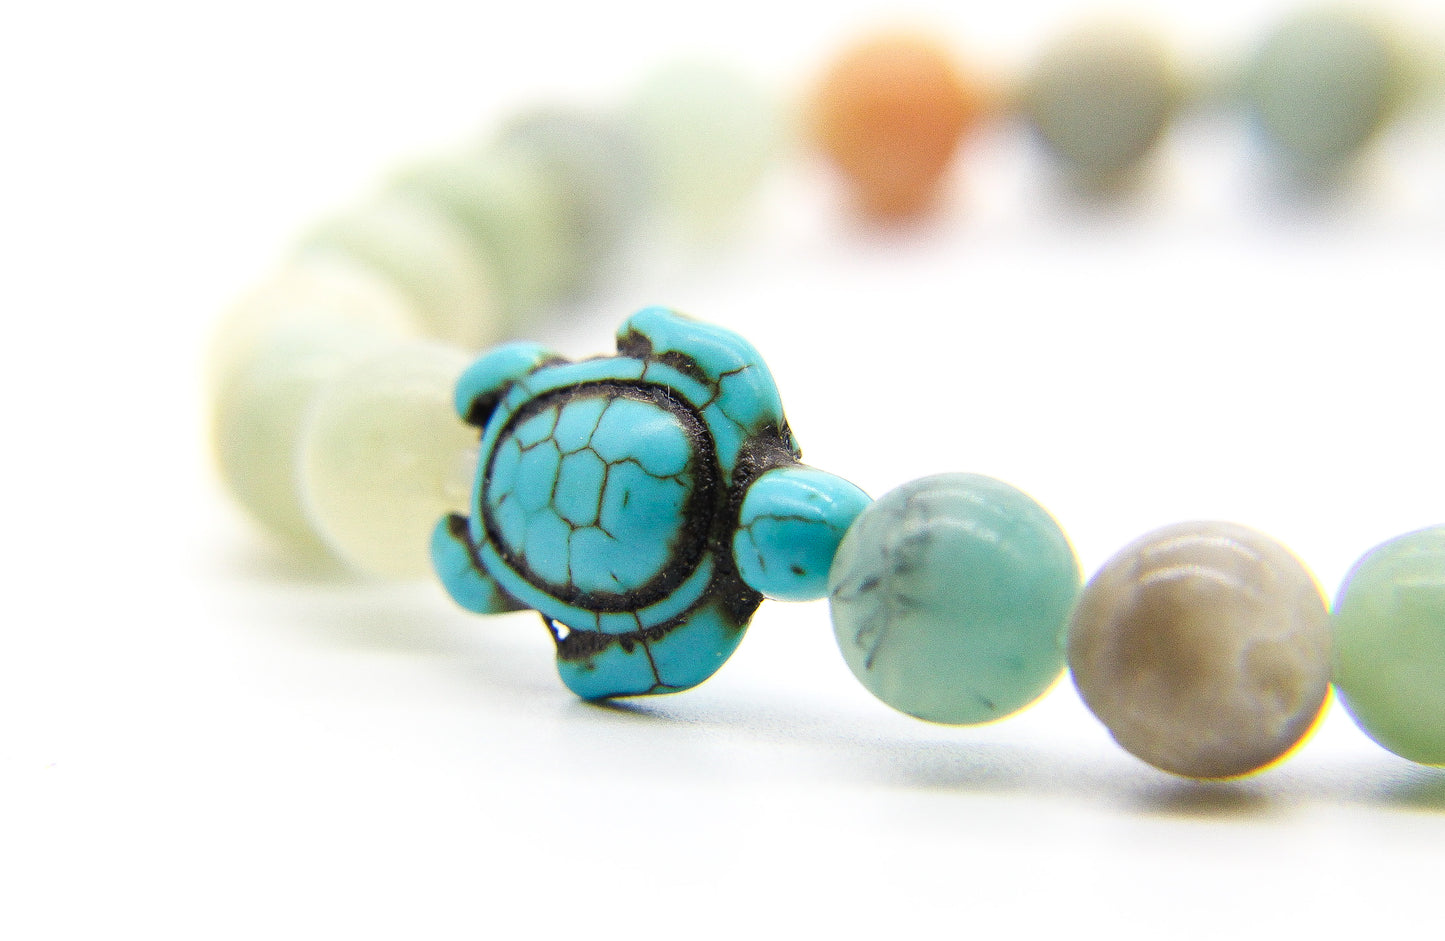 bracelet of semi-precious beads with turquoise turtle pendant